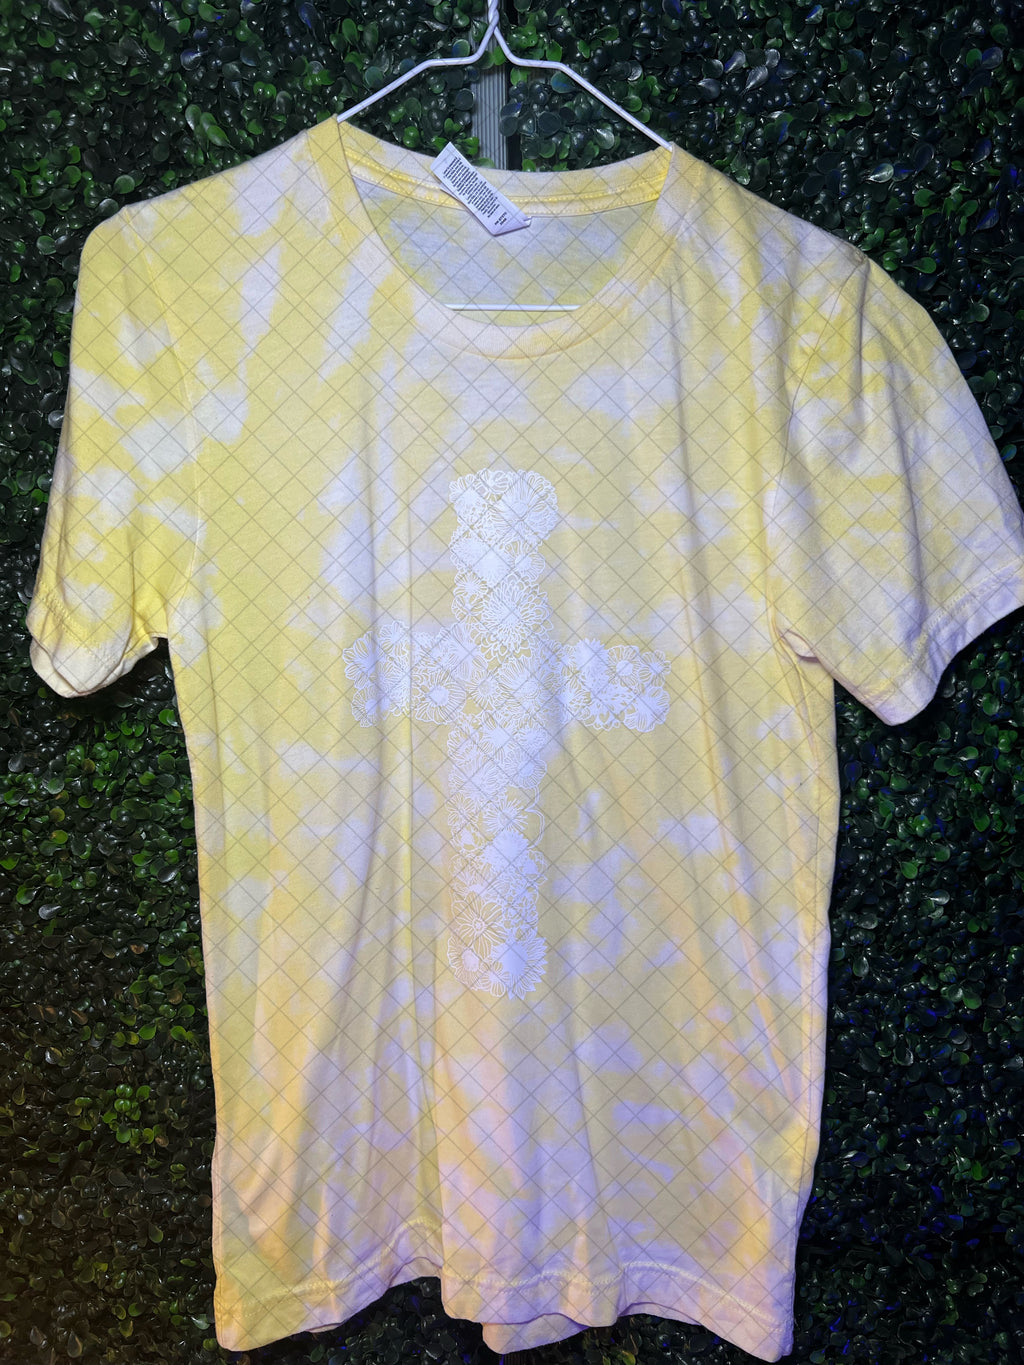 RTS Adult Small Bleach Yellow T-Shirt Lace Cross